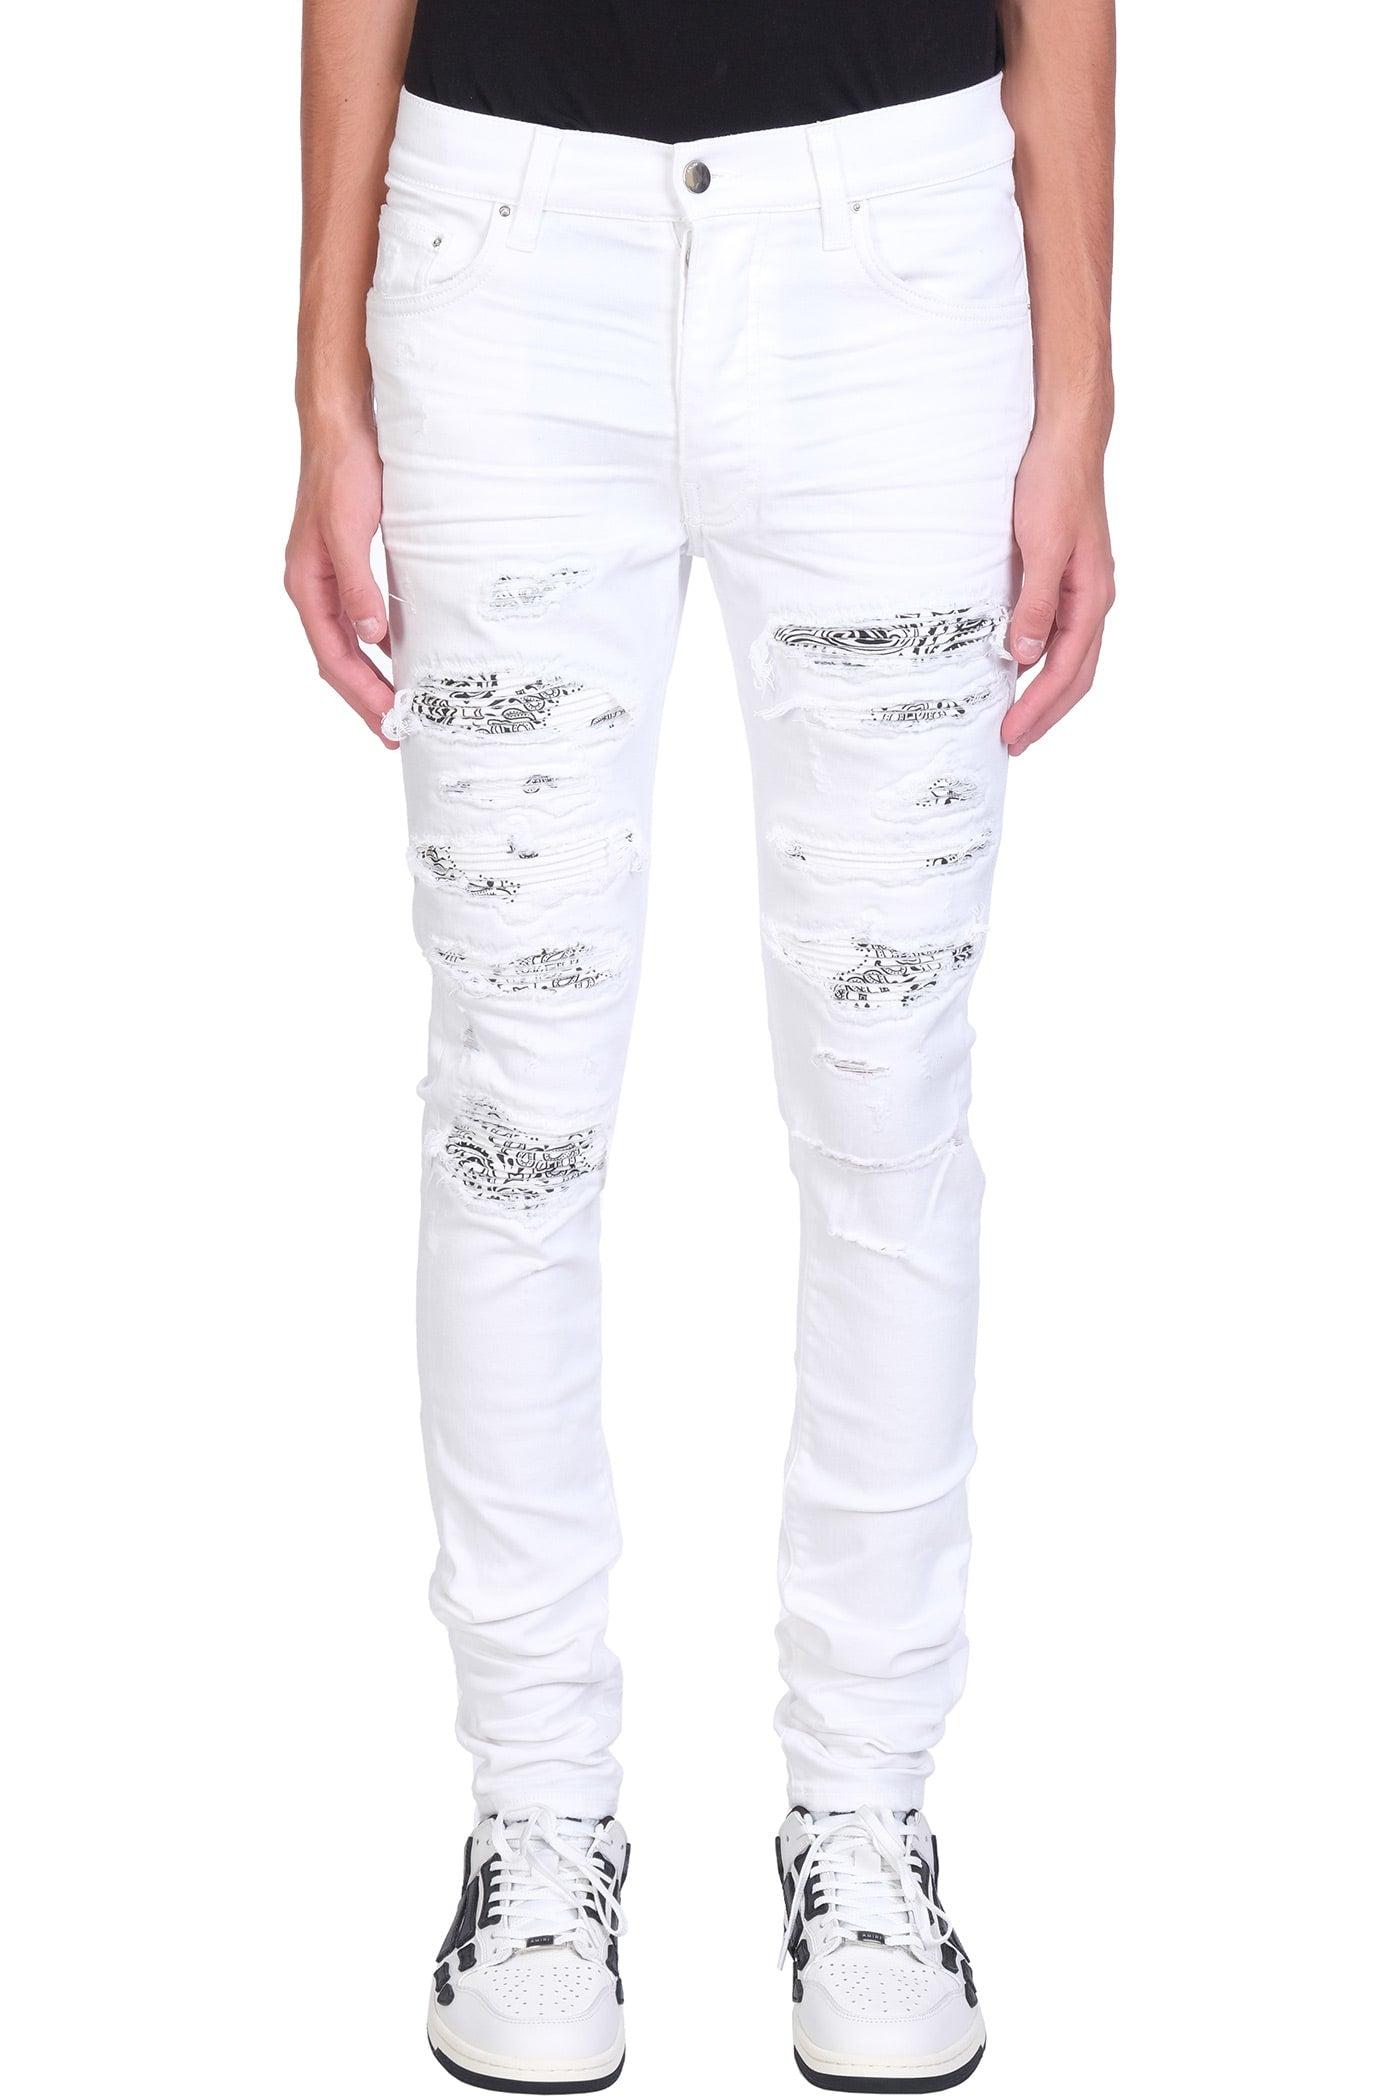 Mens White Jeans | White Slim & Skinny Jeans | Next Official